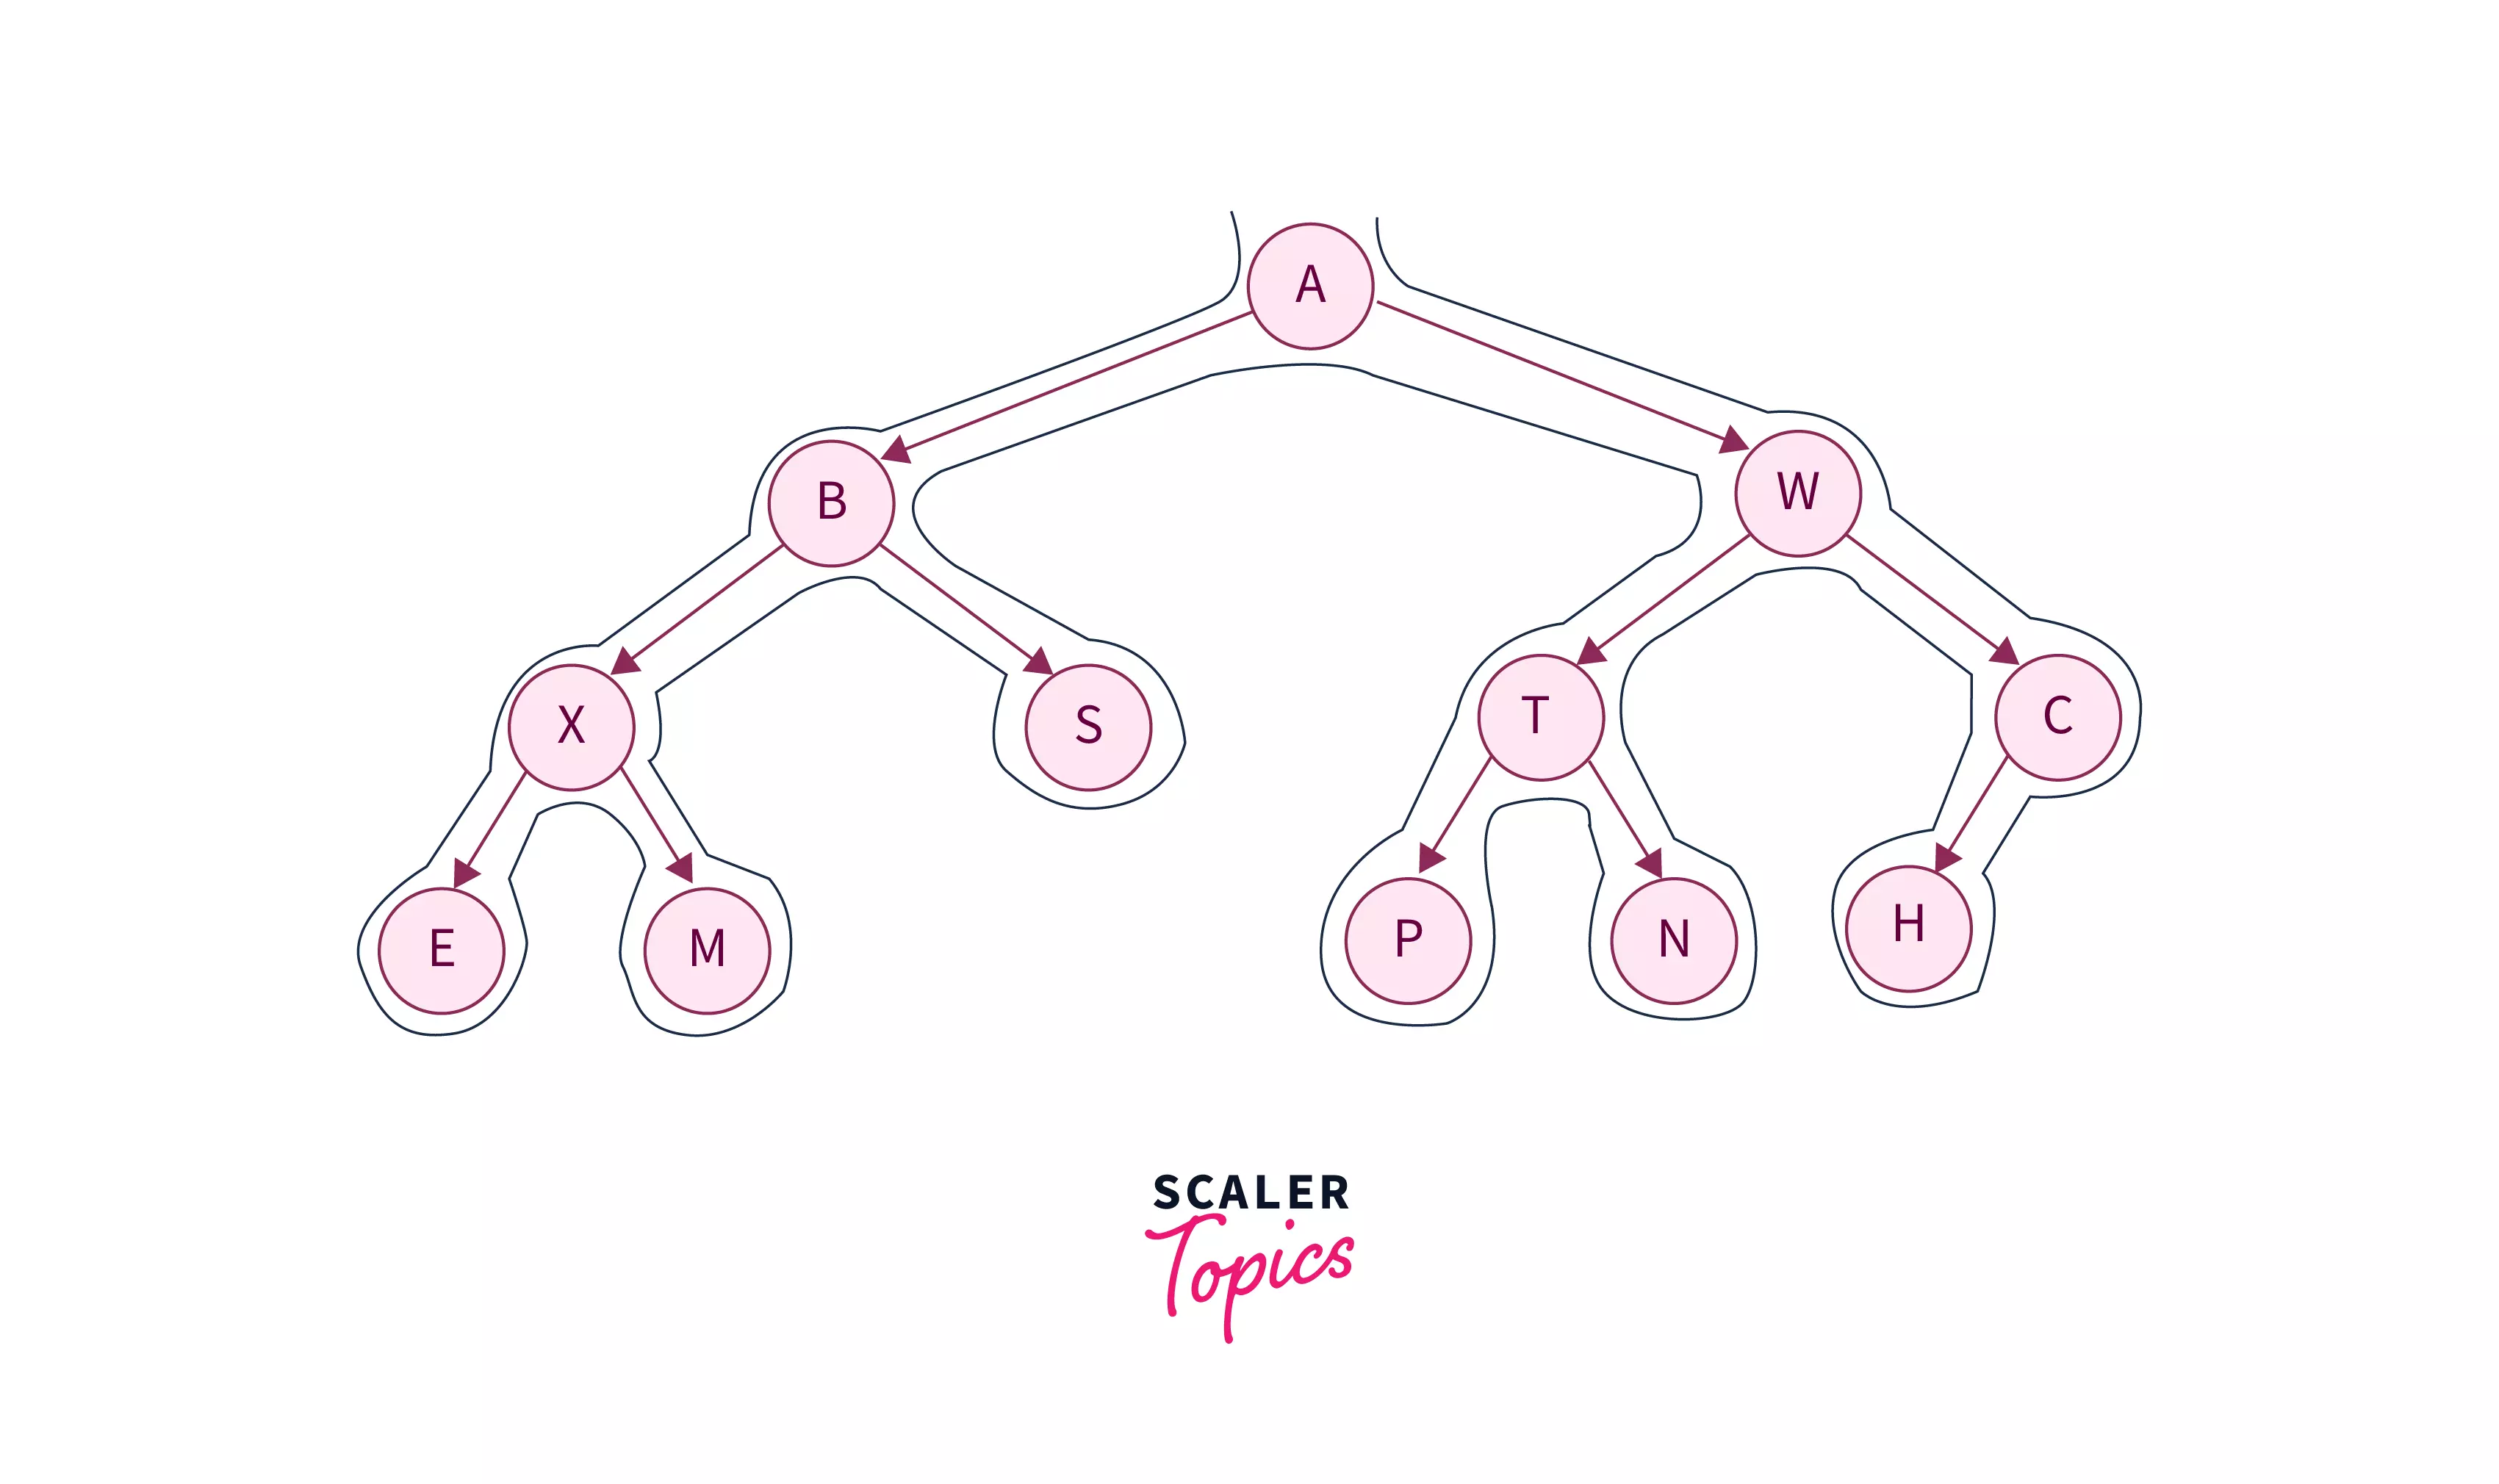 Traversal of Binary Tree - Scaler Topics